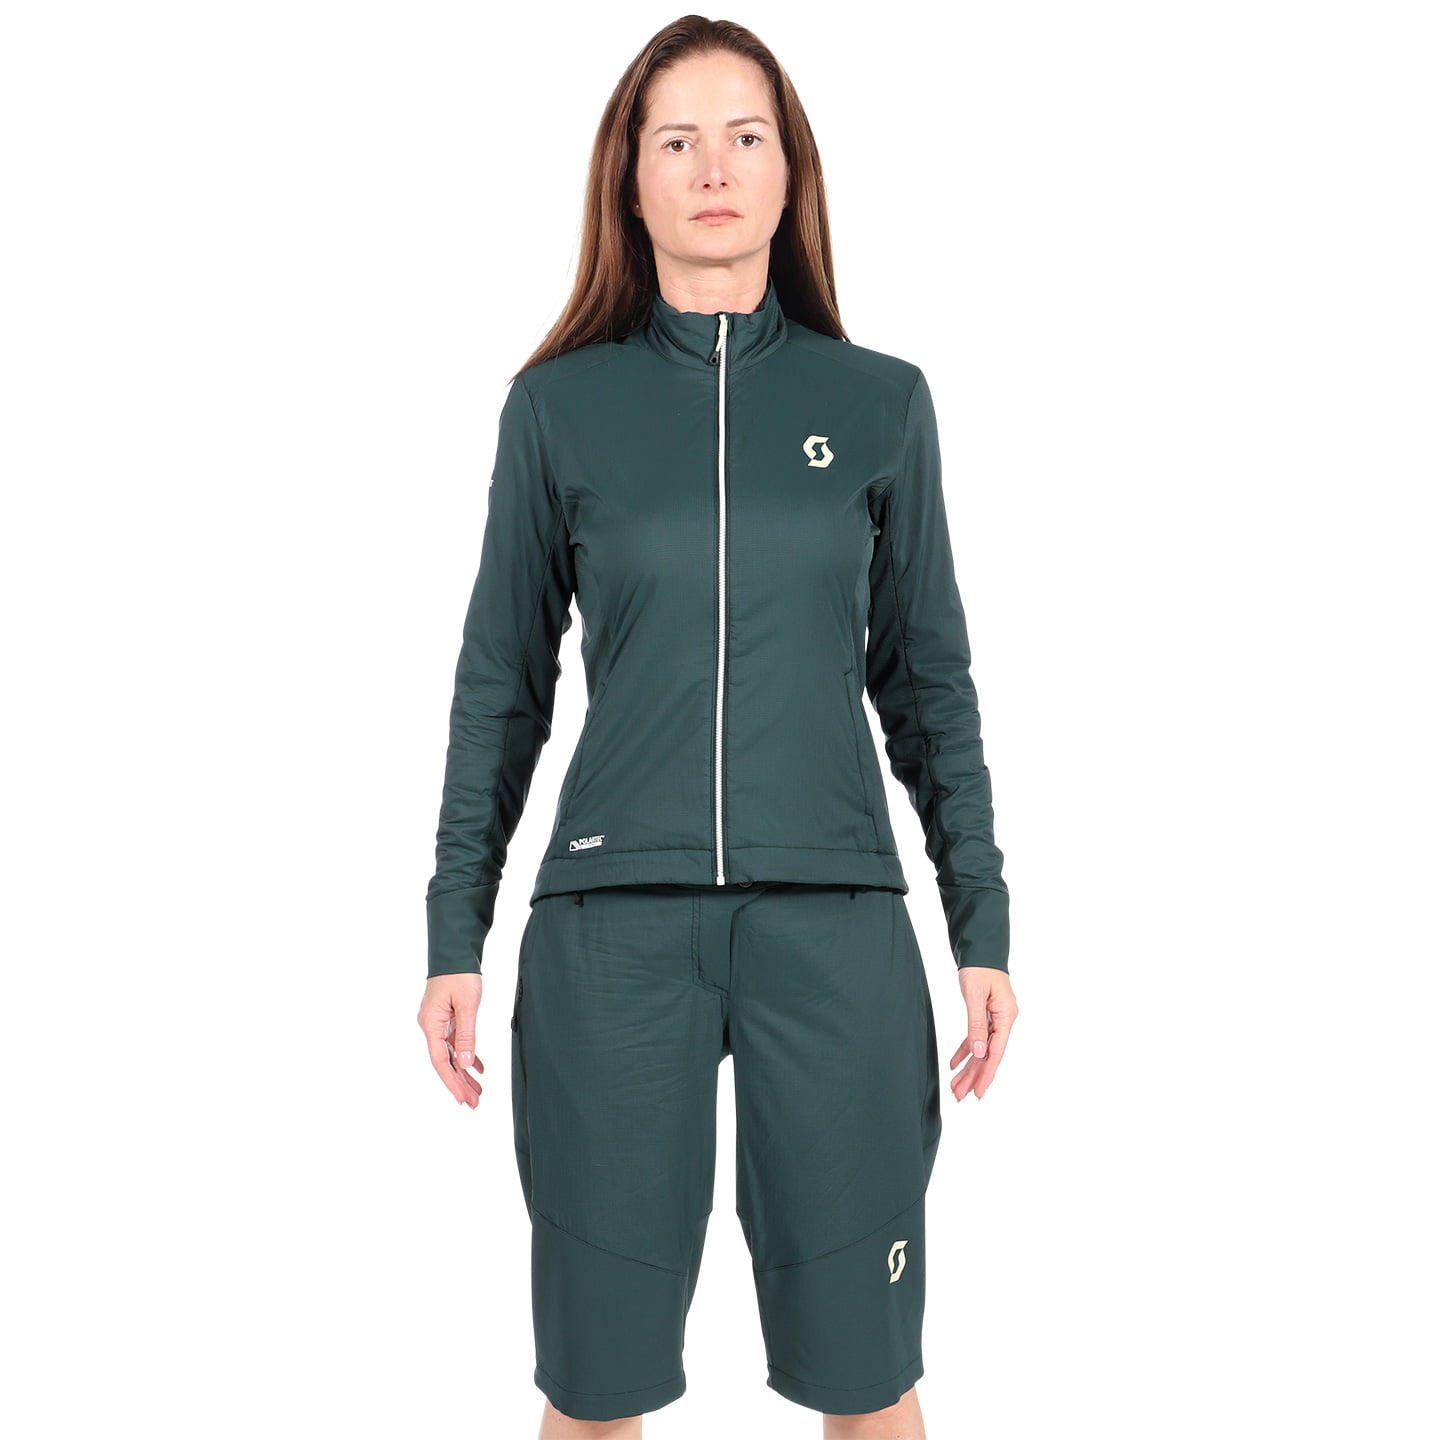 SCOTT Trail Storm Insuloft AL Women’s Set (winter jacket + cycling tights) Women’s Set (2 pieces)